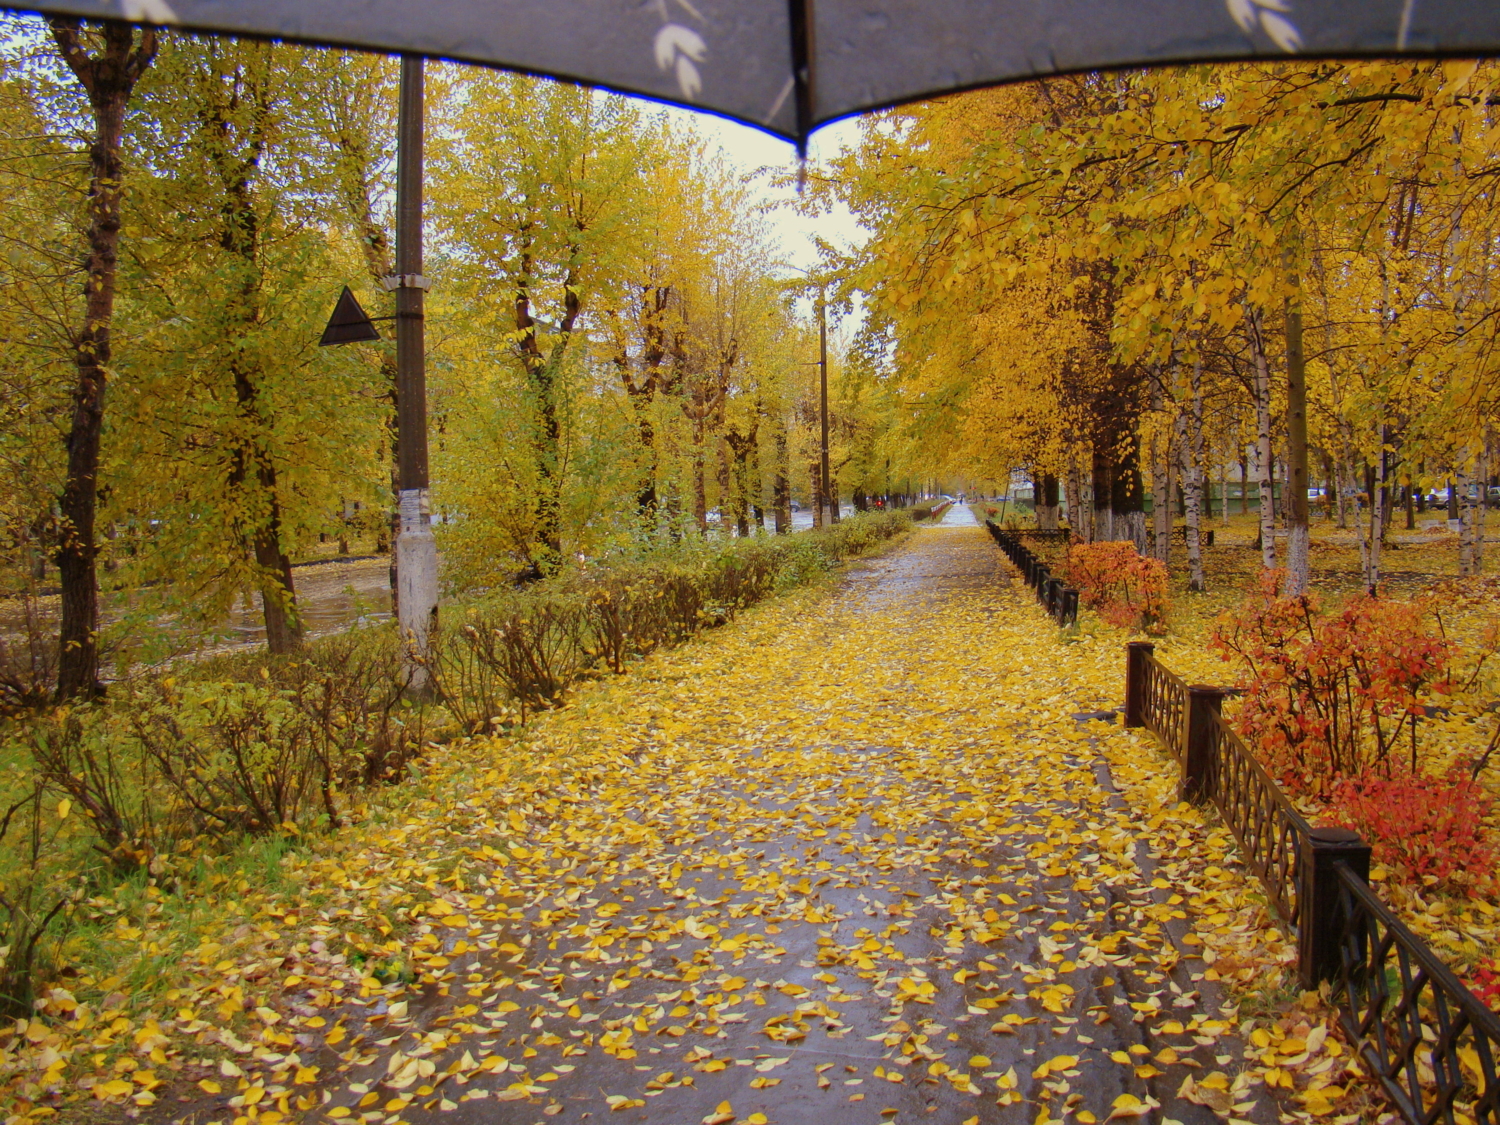 Прогулка под дождем и листопадом